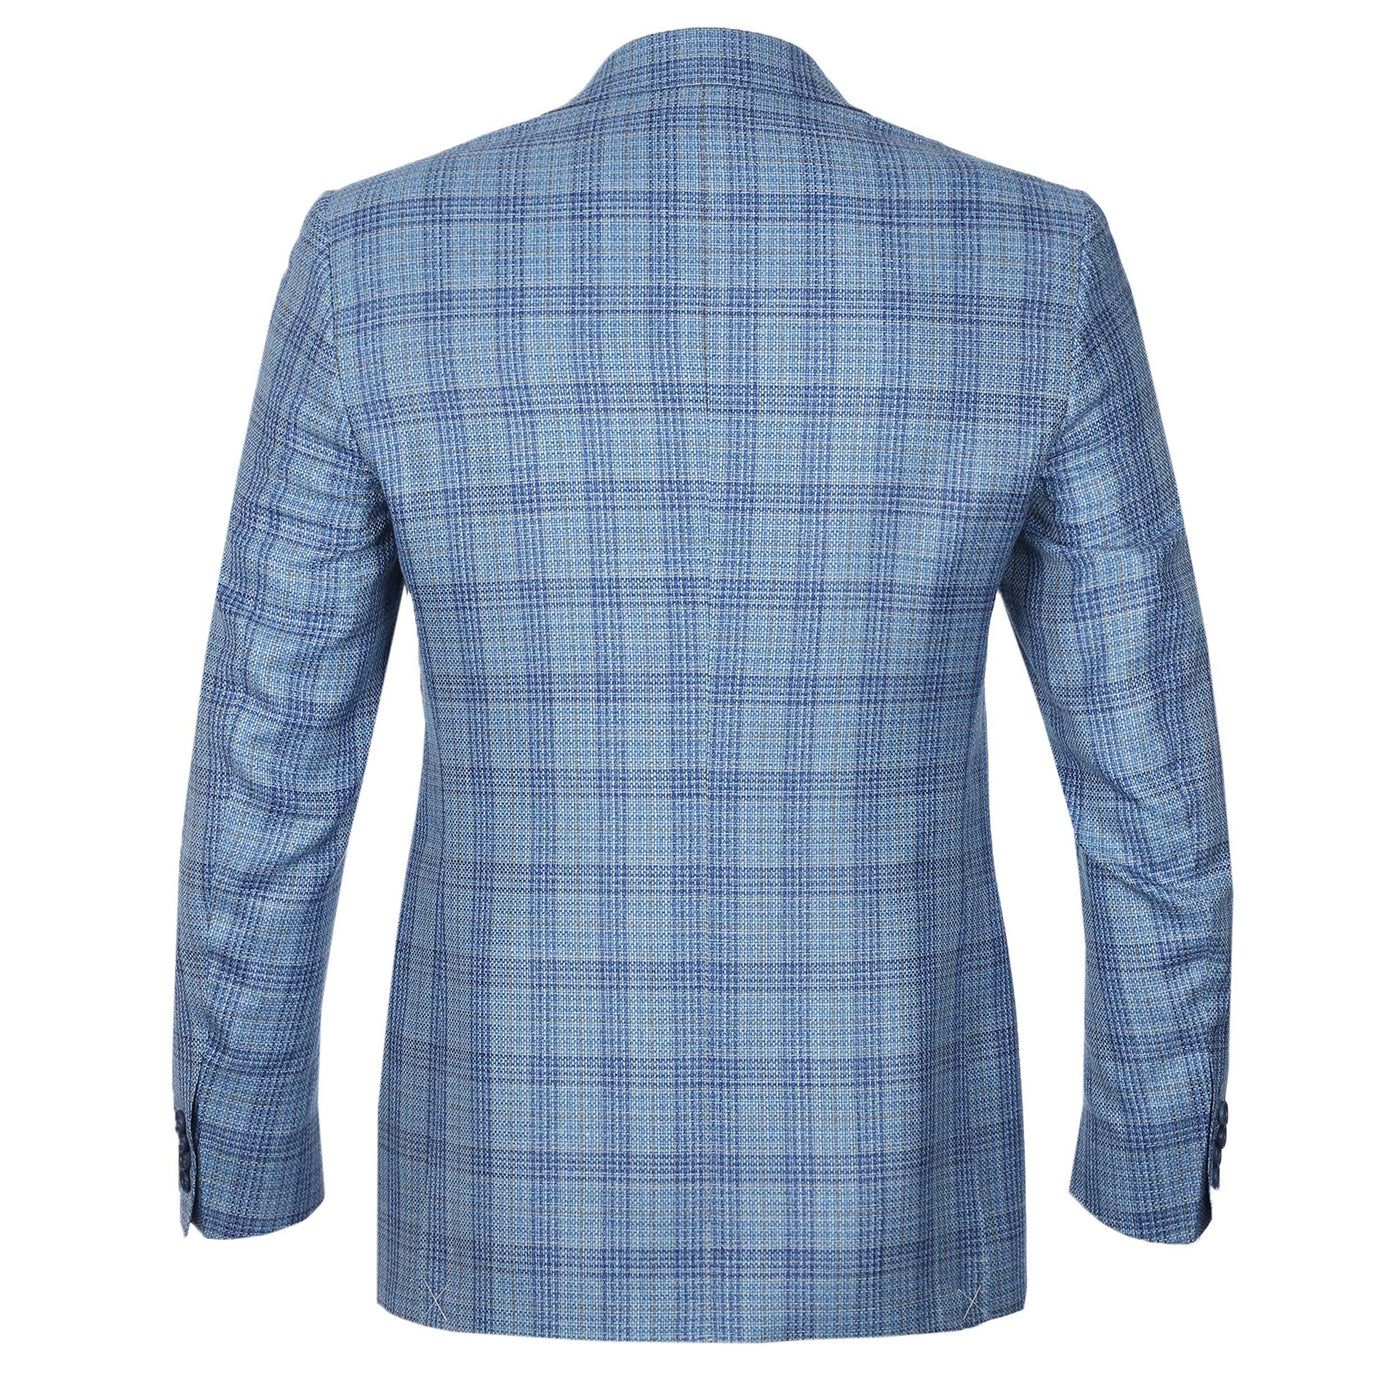 Canali Notch Lapel Milano Jacket in Sky Blue Check Back